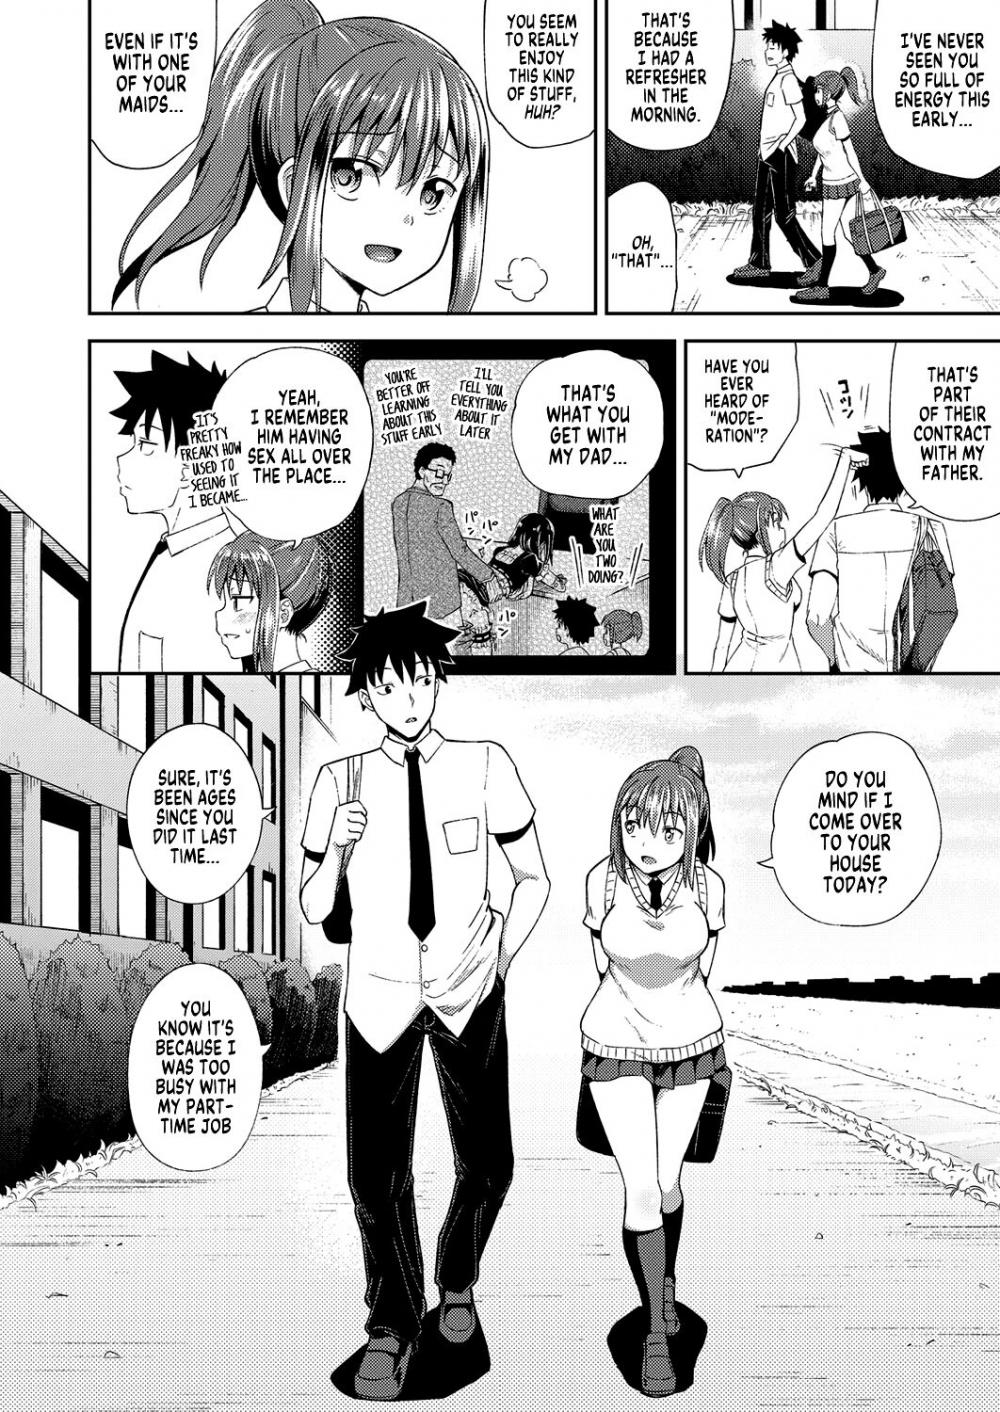 Hentai Manga Comic-My Childhood Friend is my Personal Mouth Maid-v22m-v22m-v22m-Chapter 1-3